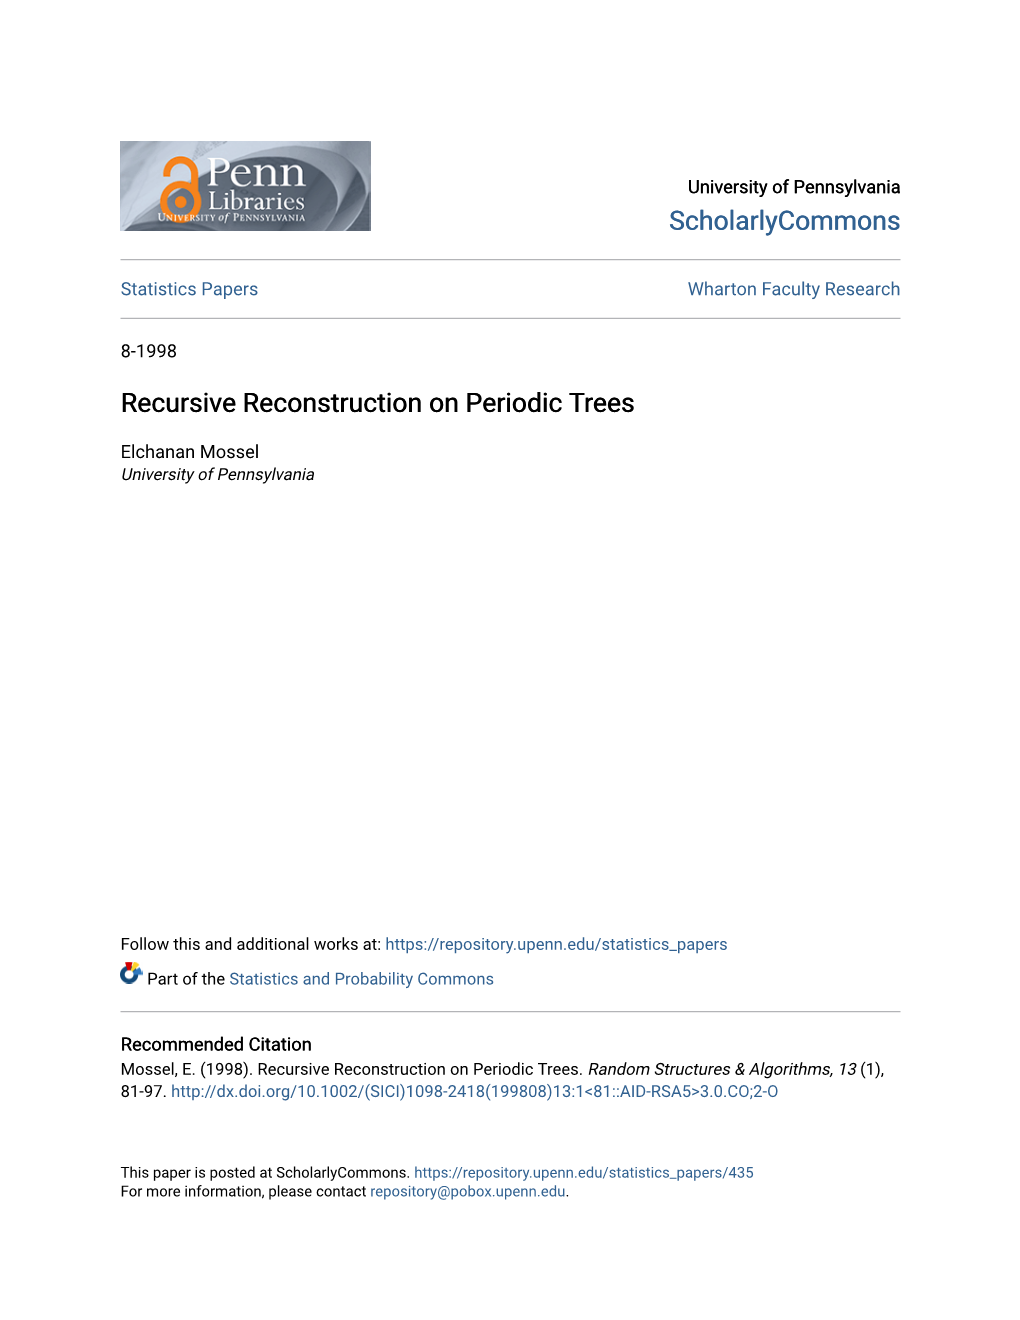 Recursive Reconstruction on Periodic Trees